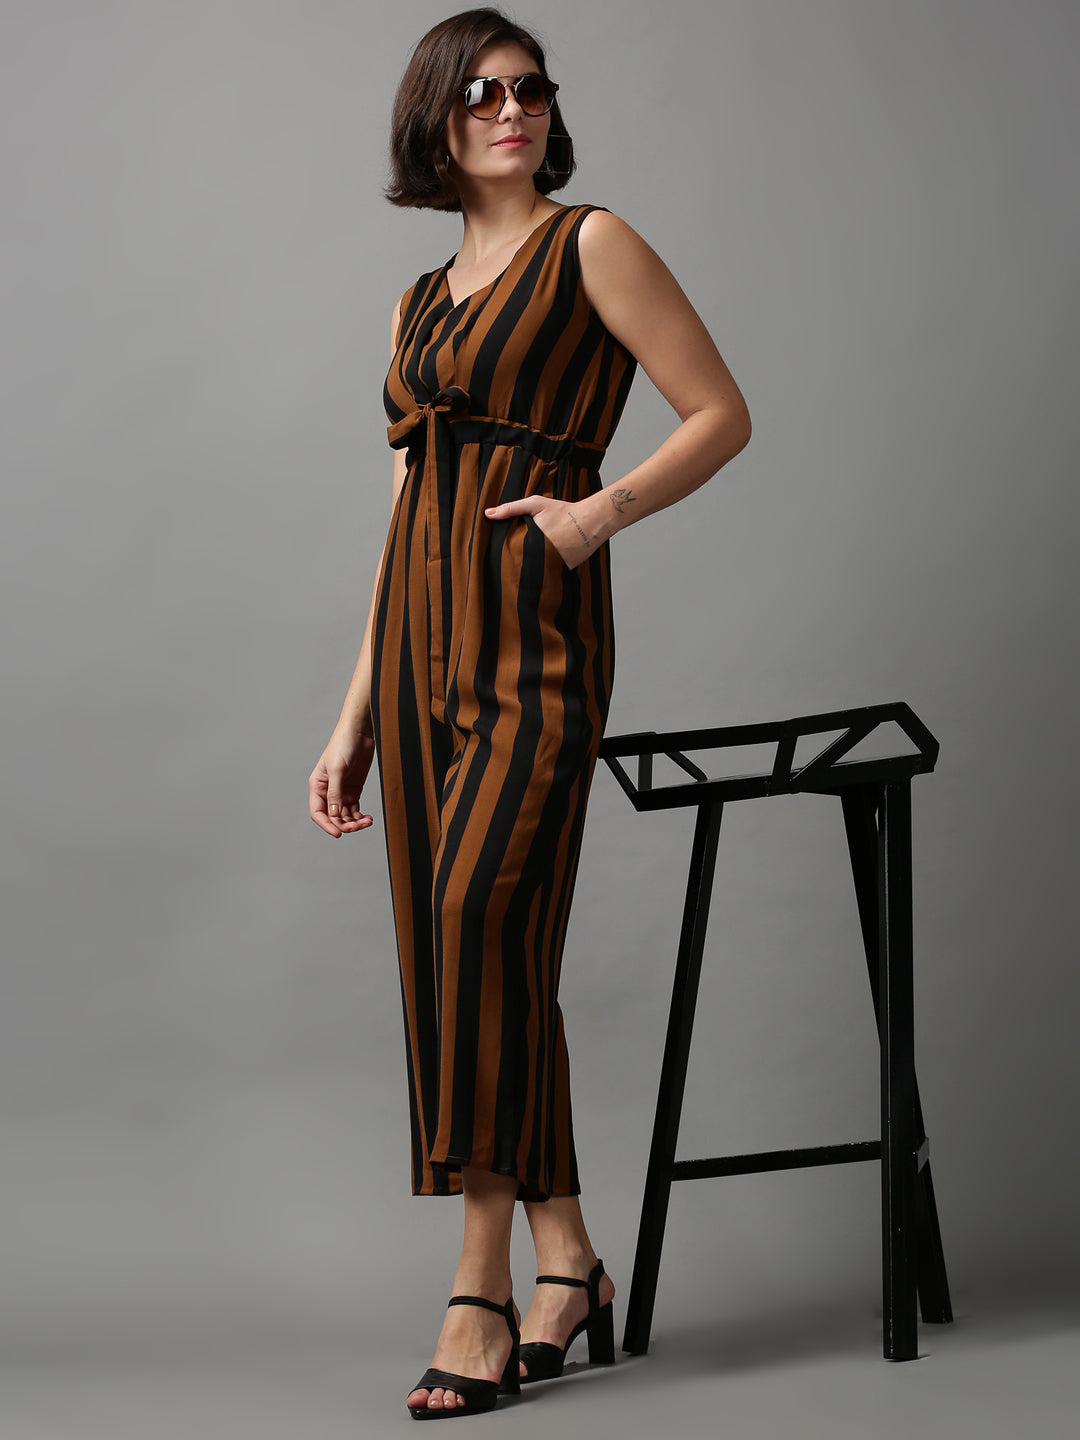 Women's Brown Striped Jumpsuit